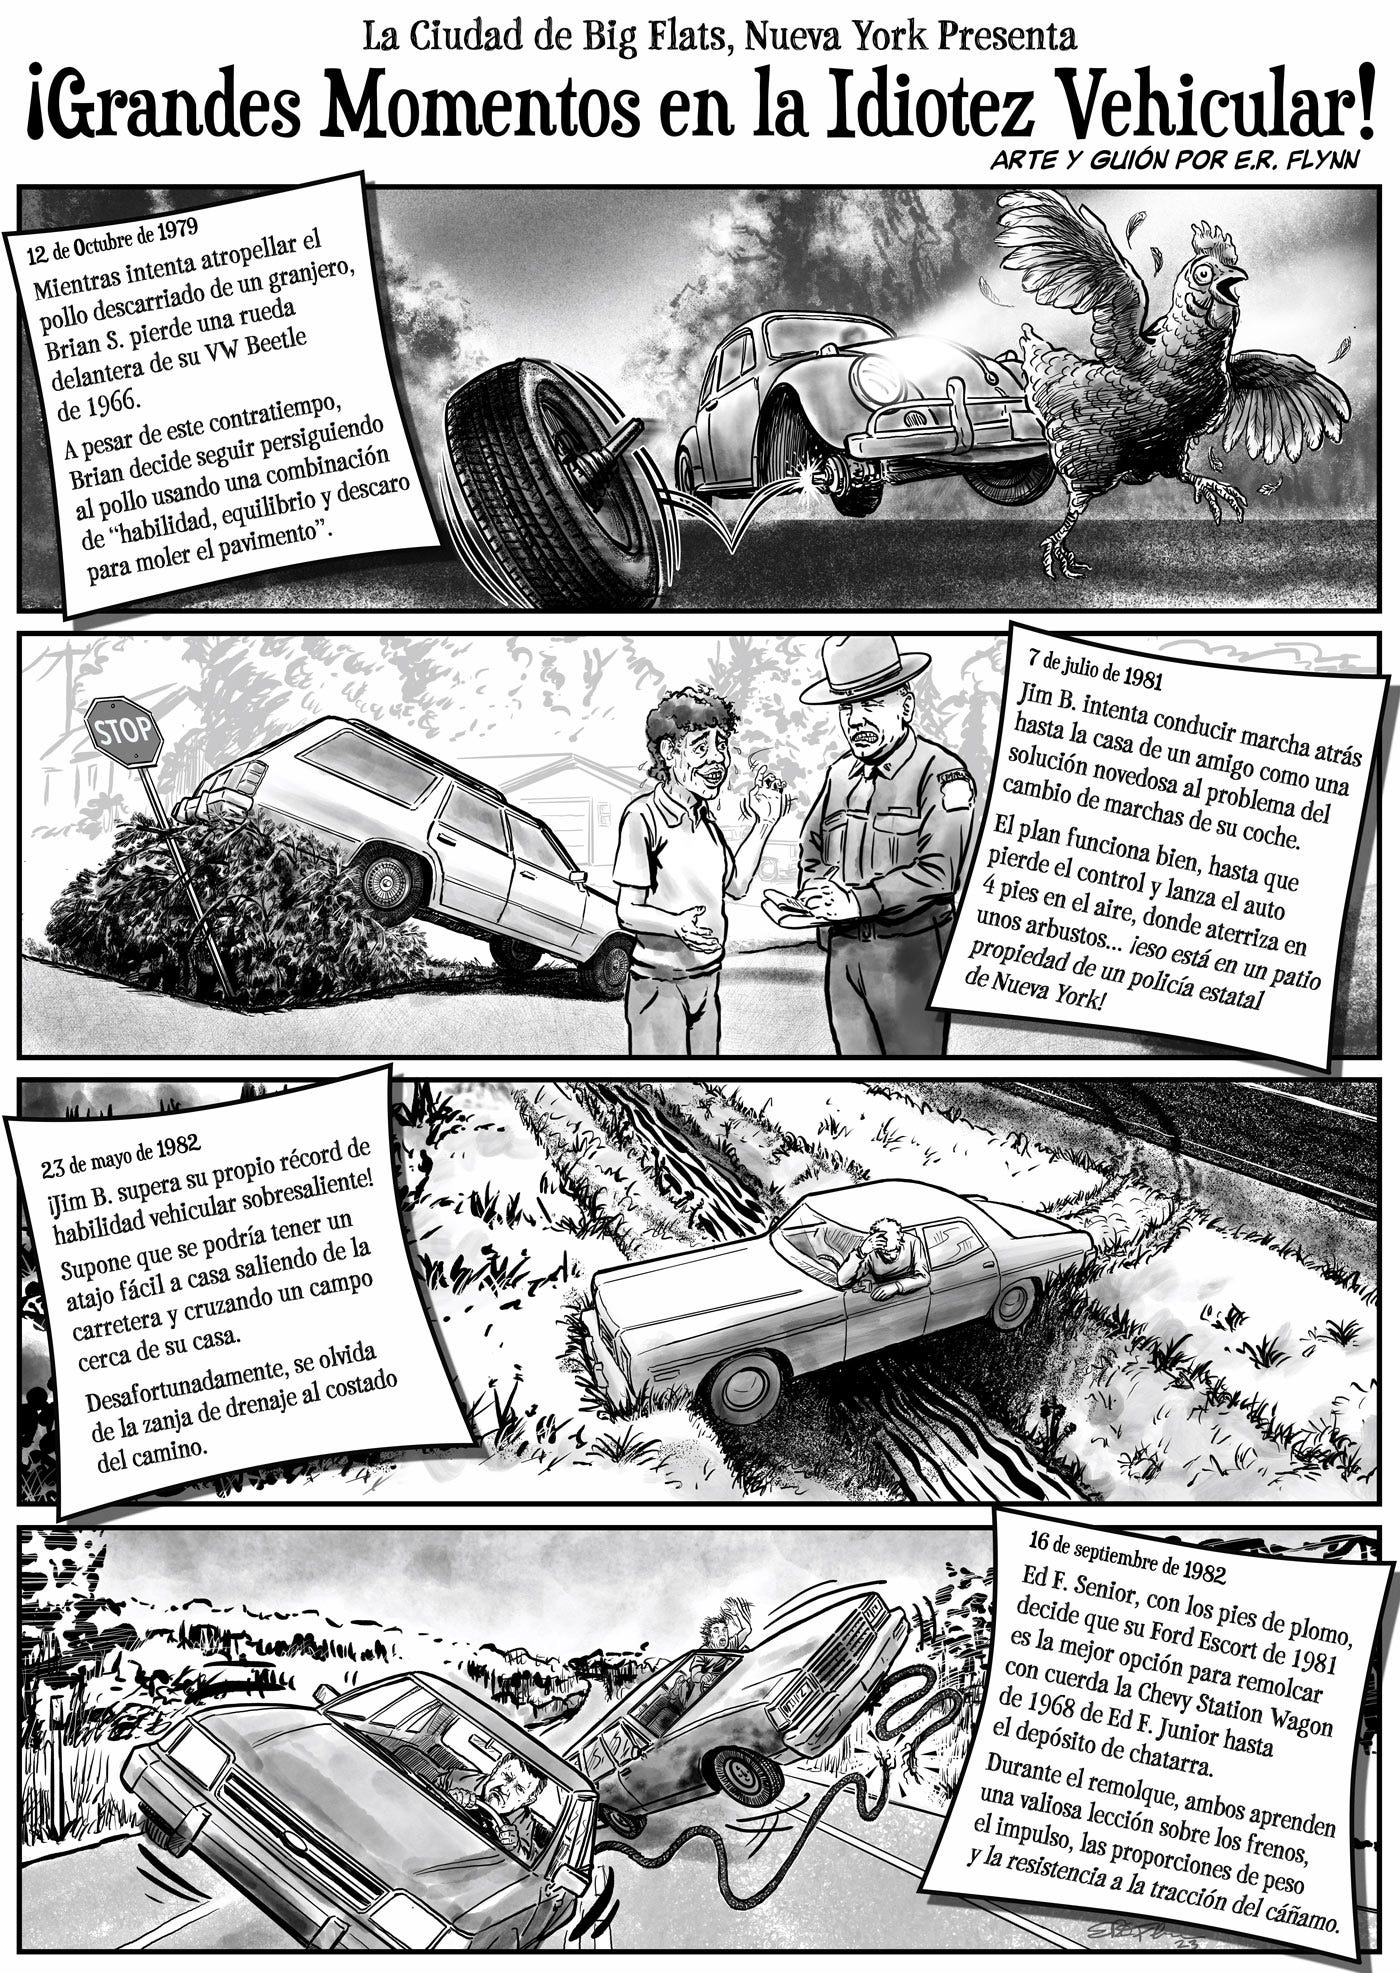 Spanish Vehicular Idiocy Comic by ER Flynn